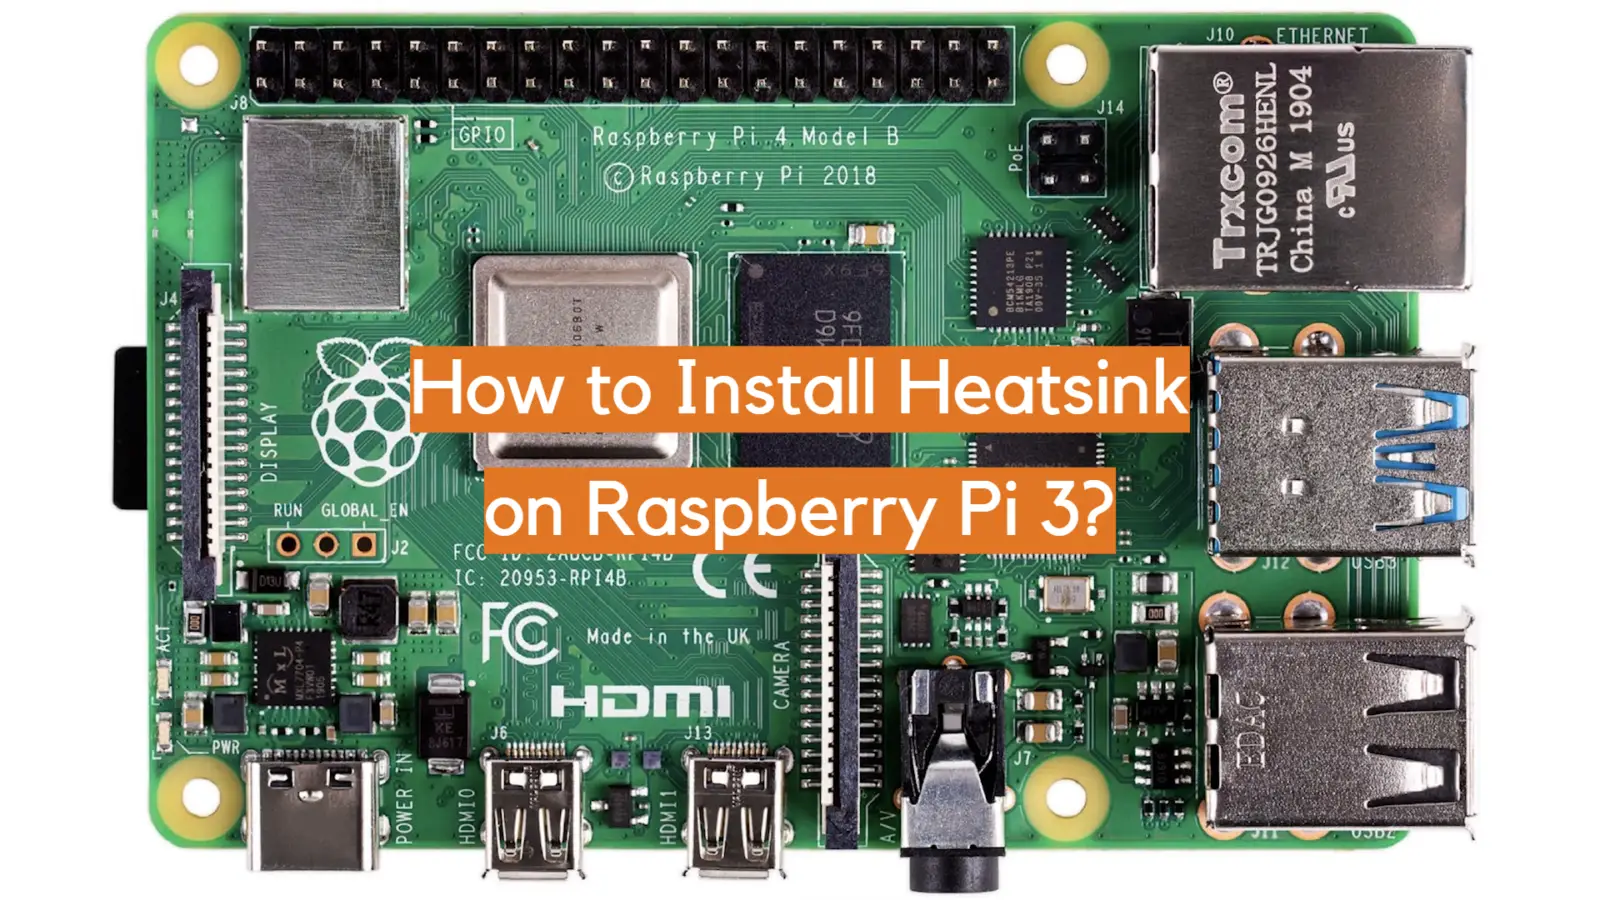 How to Install Heatsink on Raspberry Pi 3?